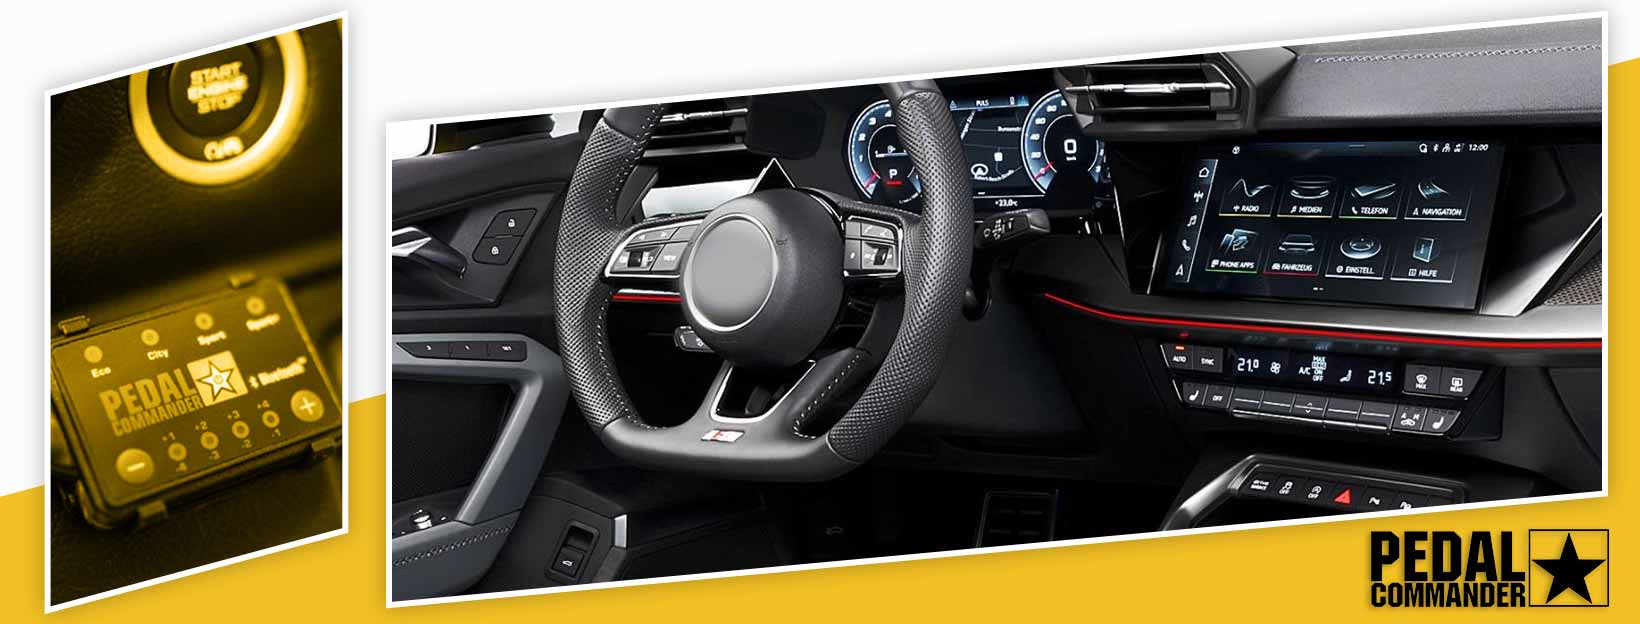 Pedal Commander for Audi A3 - interior